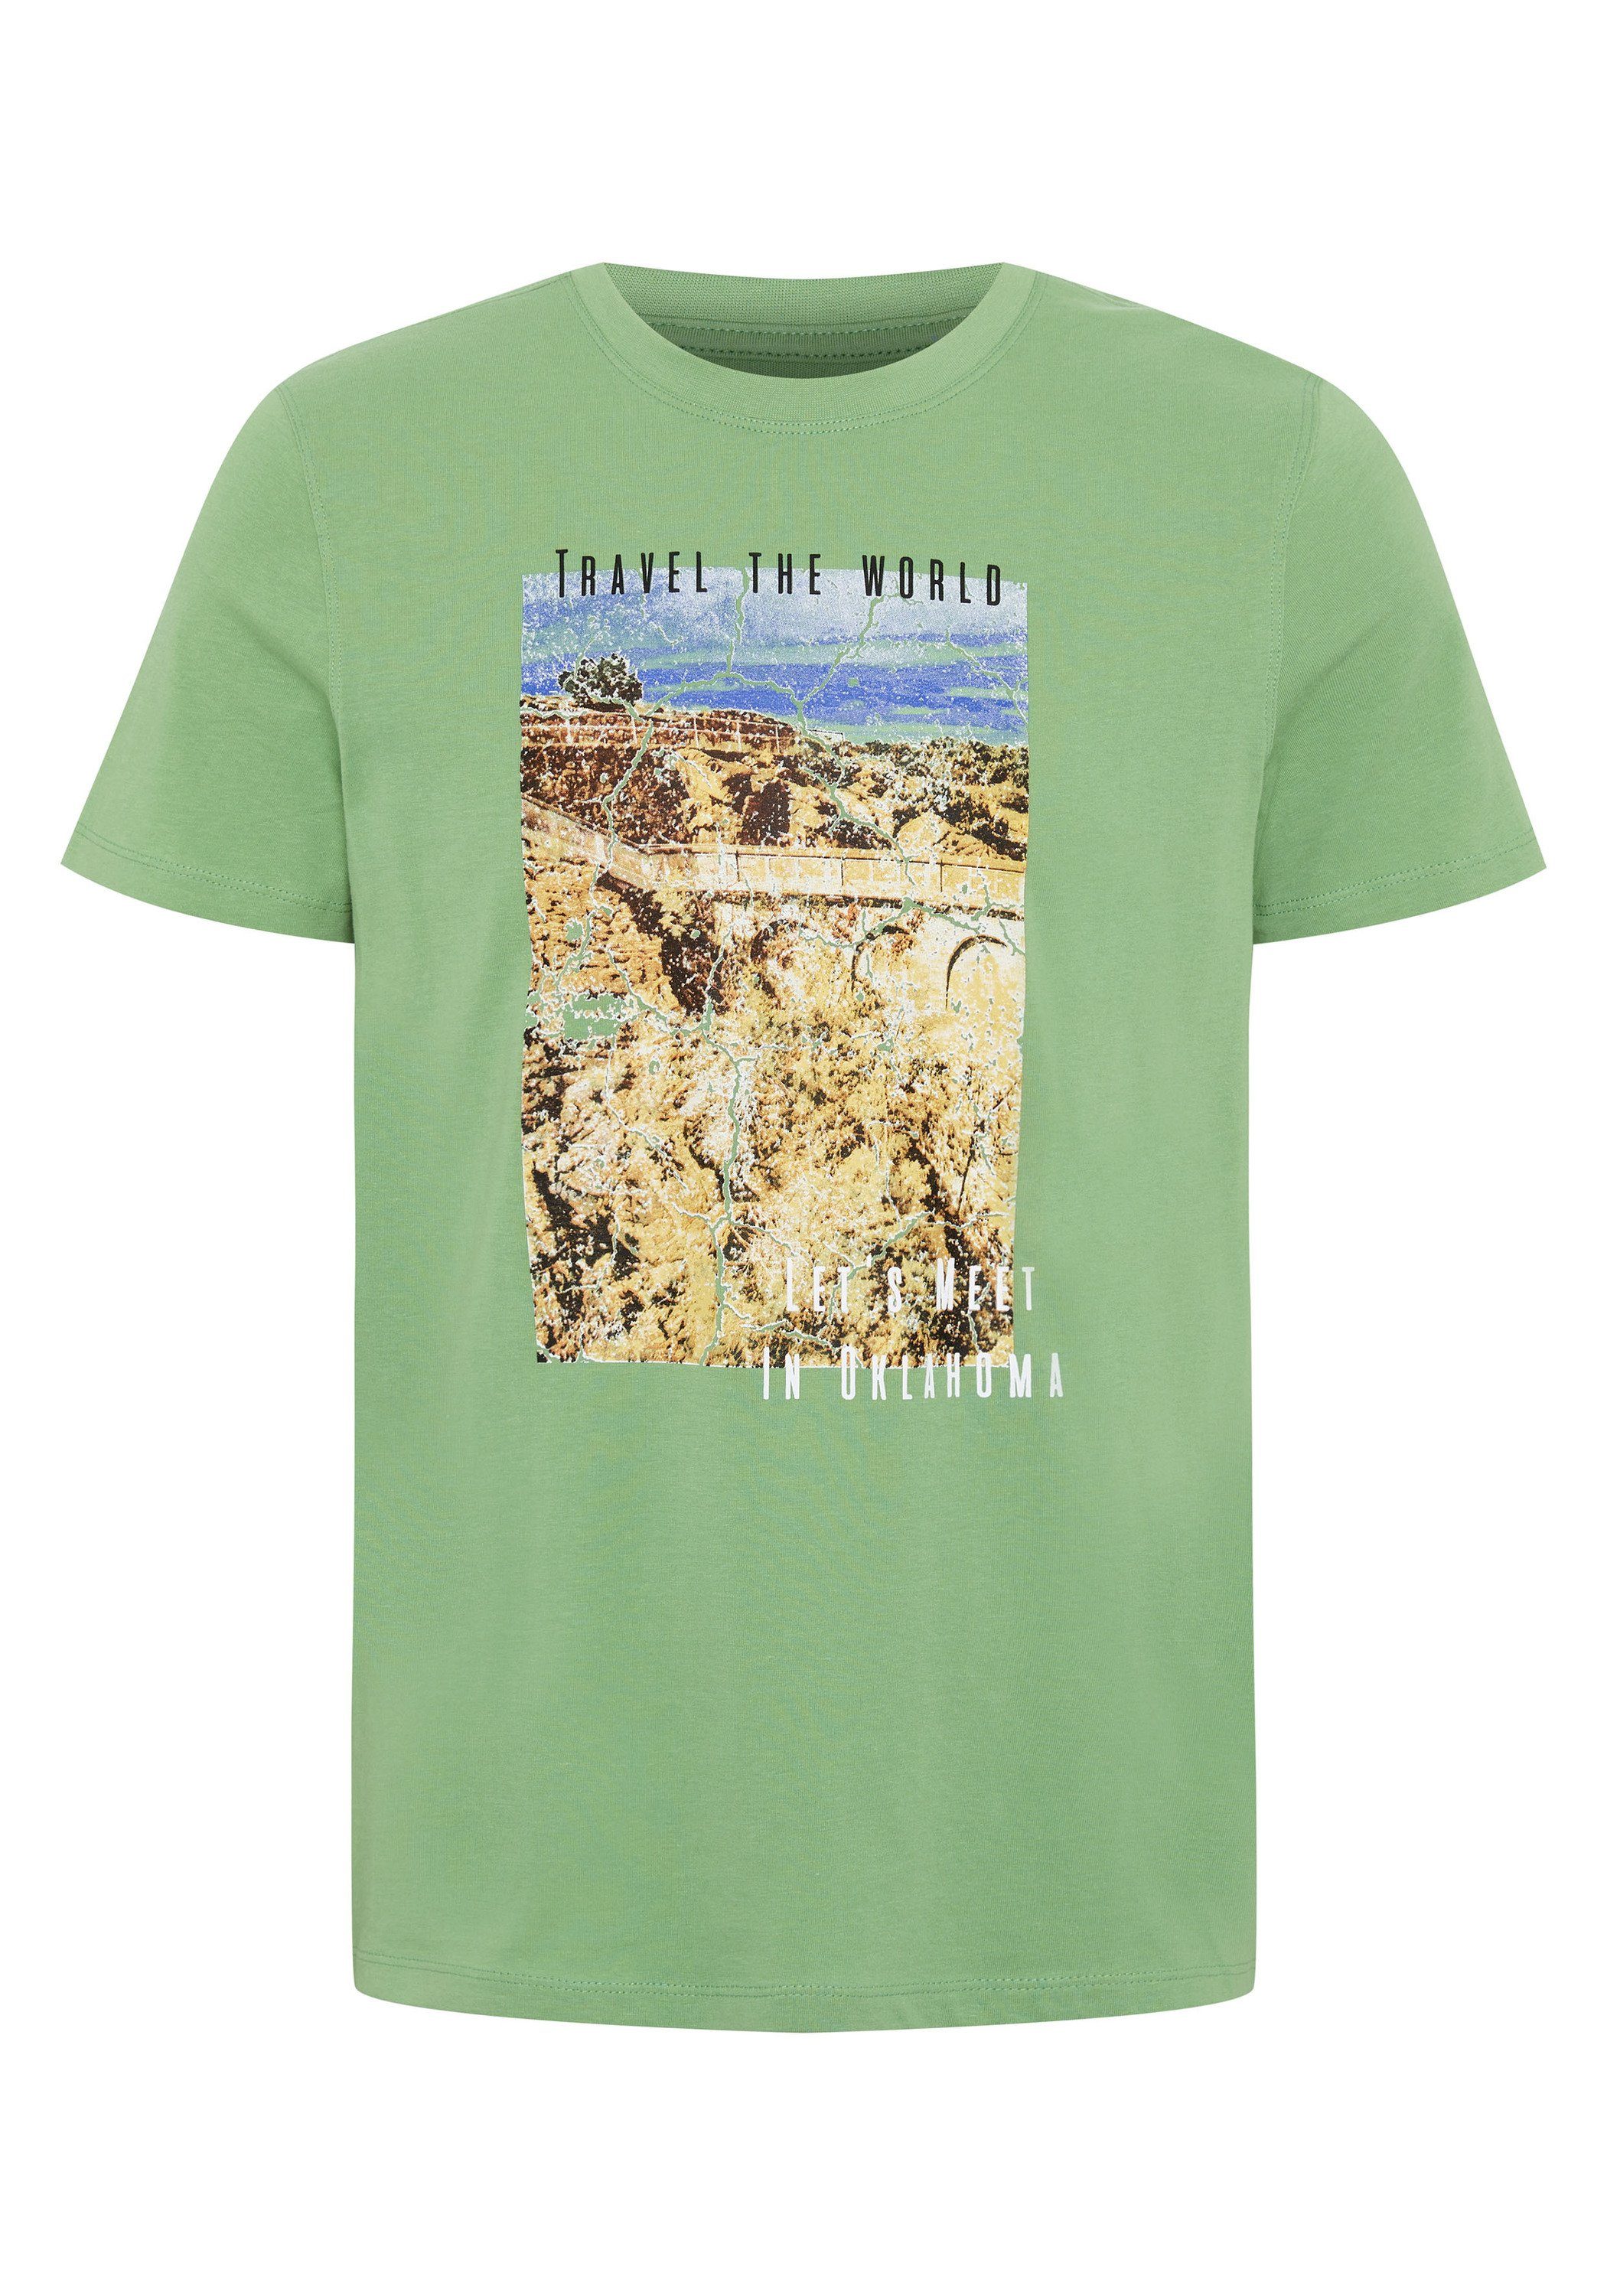 Oklahoma Jeans Print-Shirt mit Travel-Print 16-6116 Shale Green